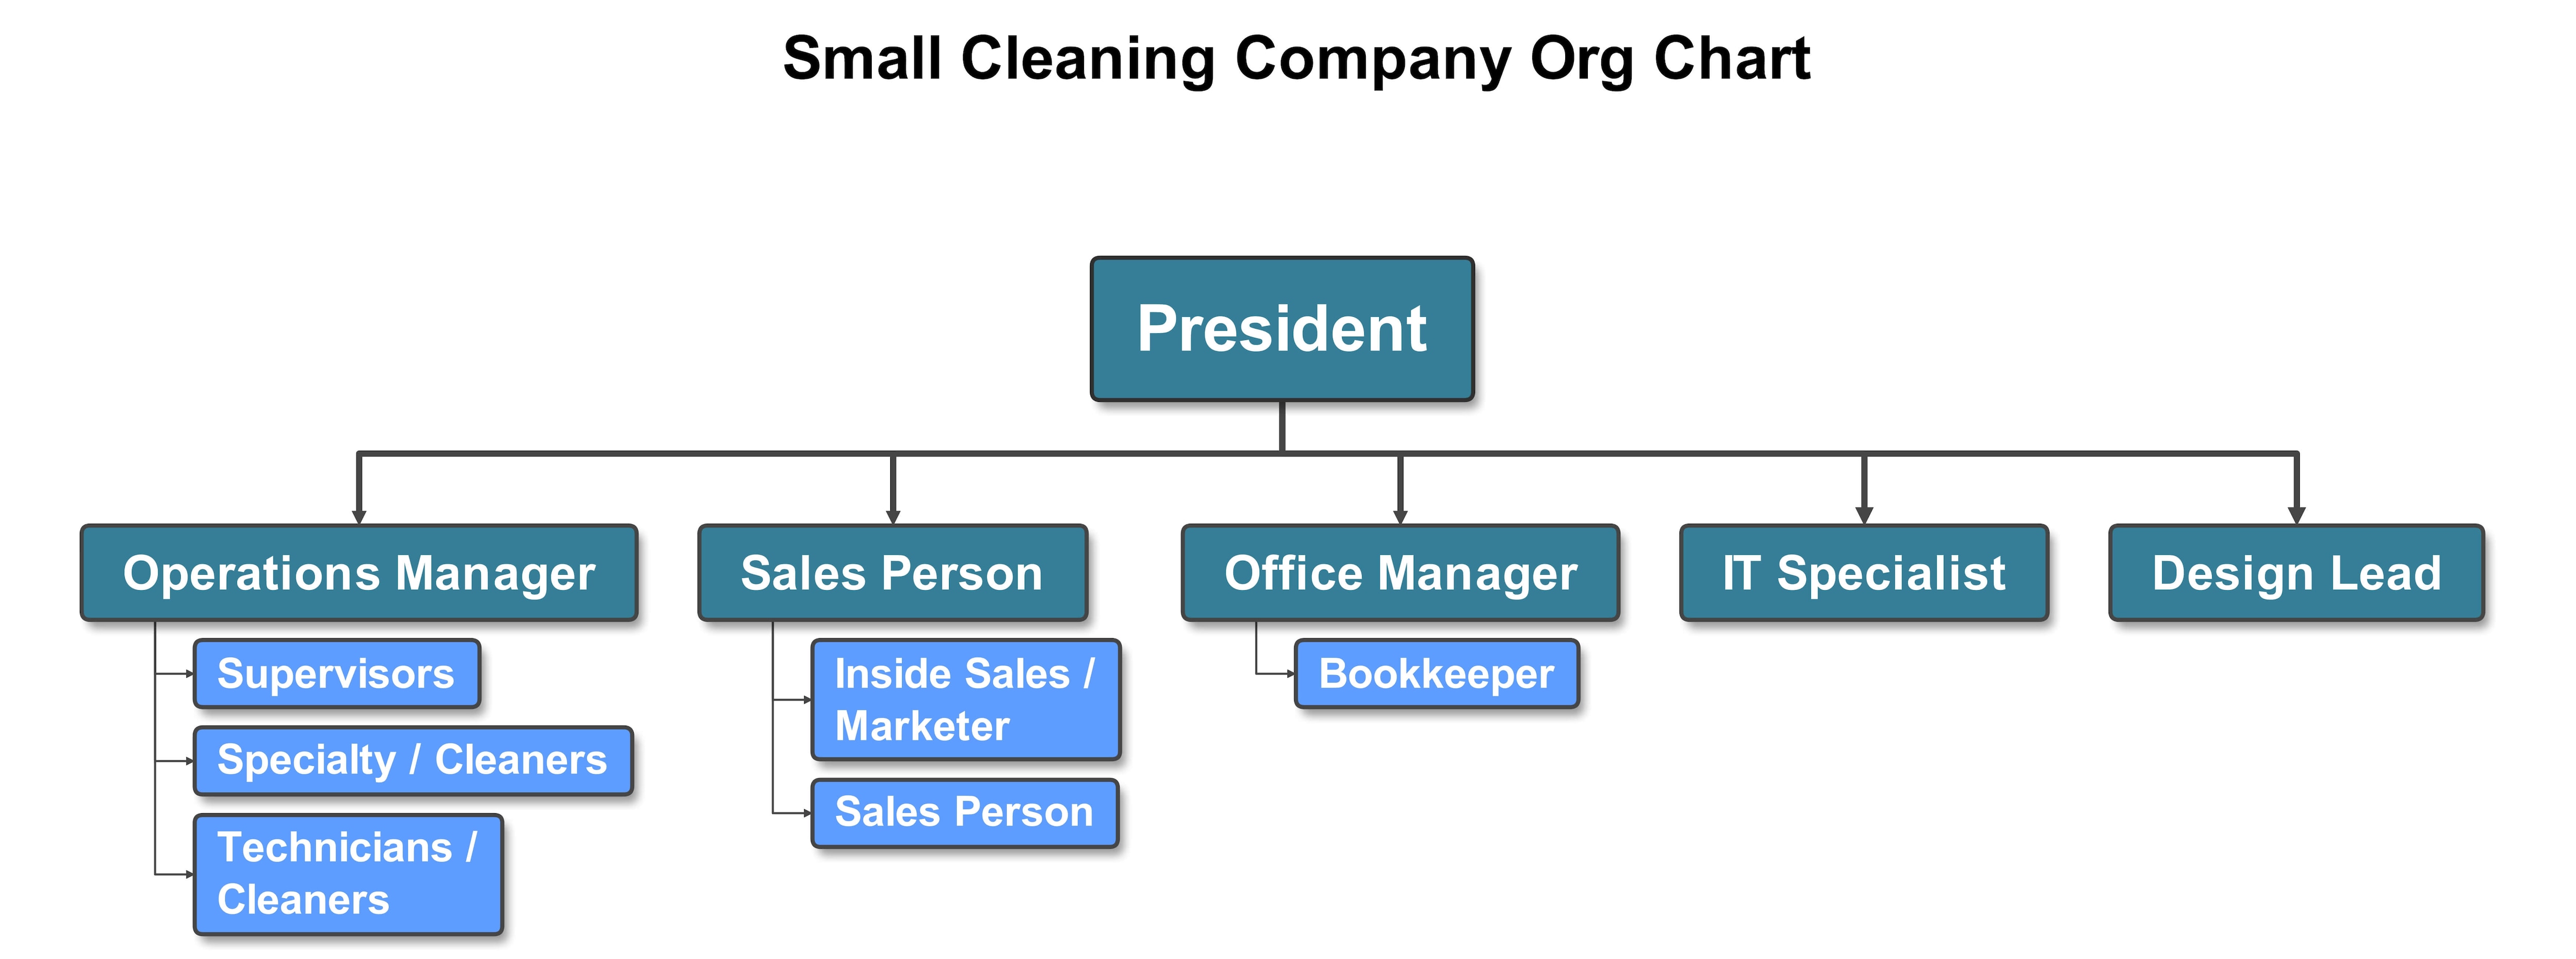 Team-Based Organizational Chart